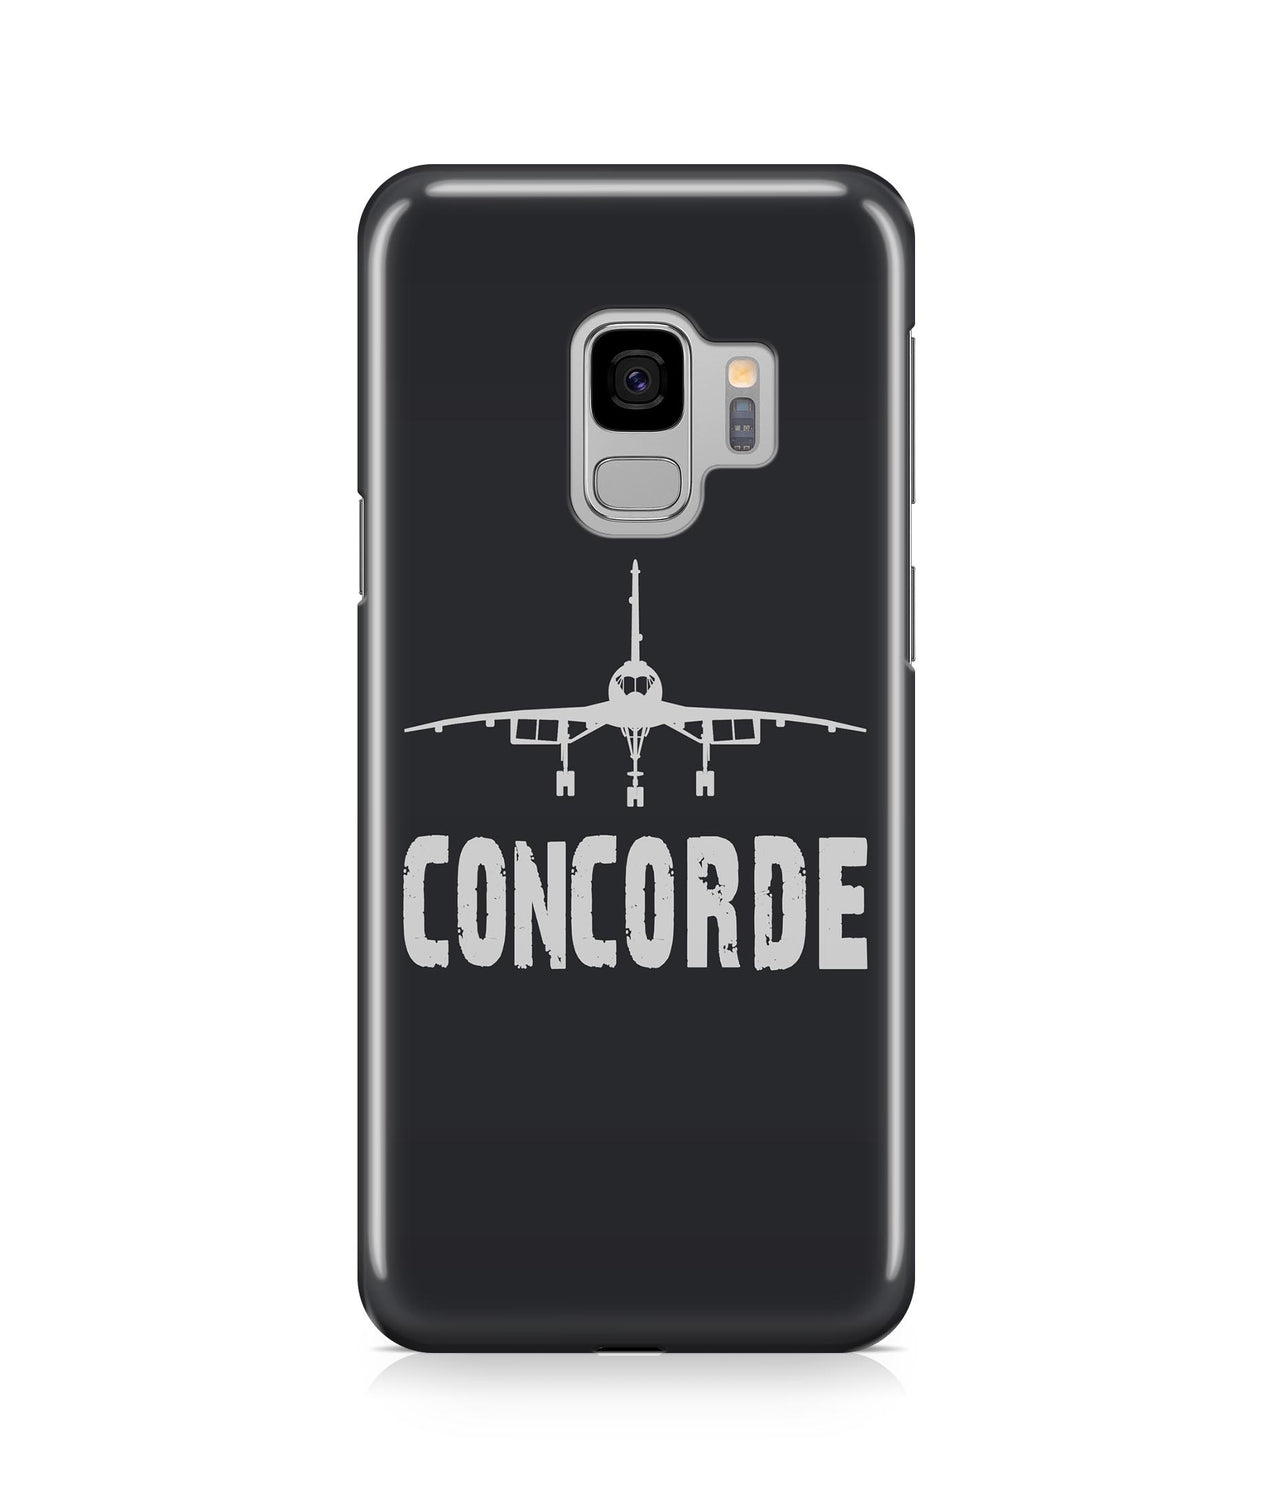 Concorde Plane & Designed Samsung J Cases